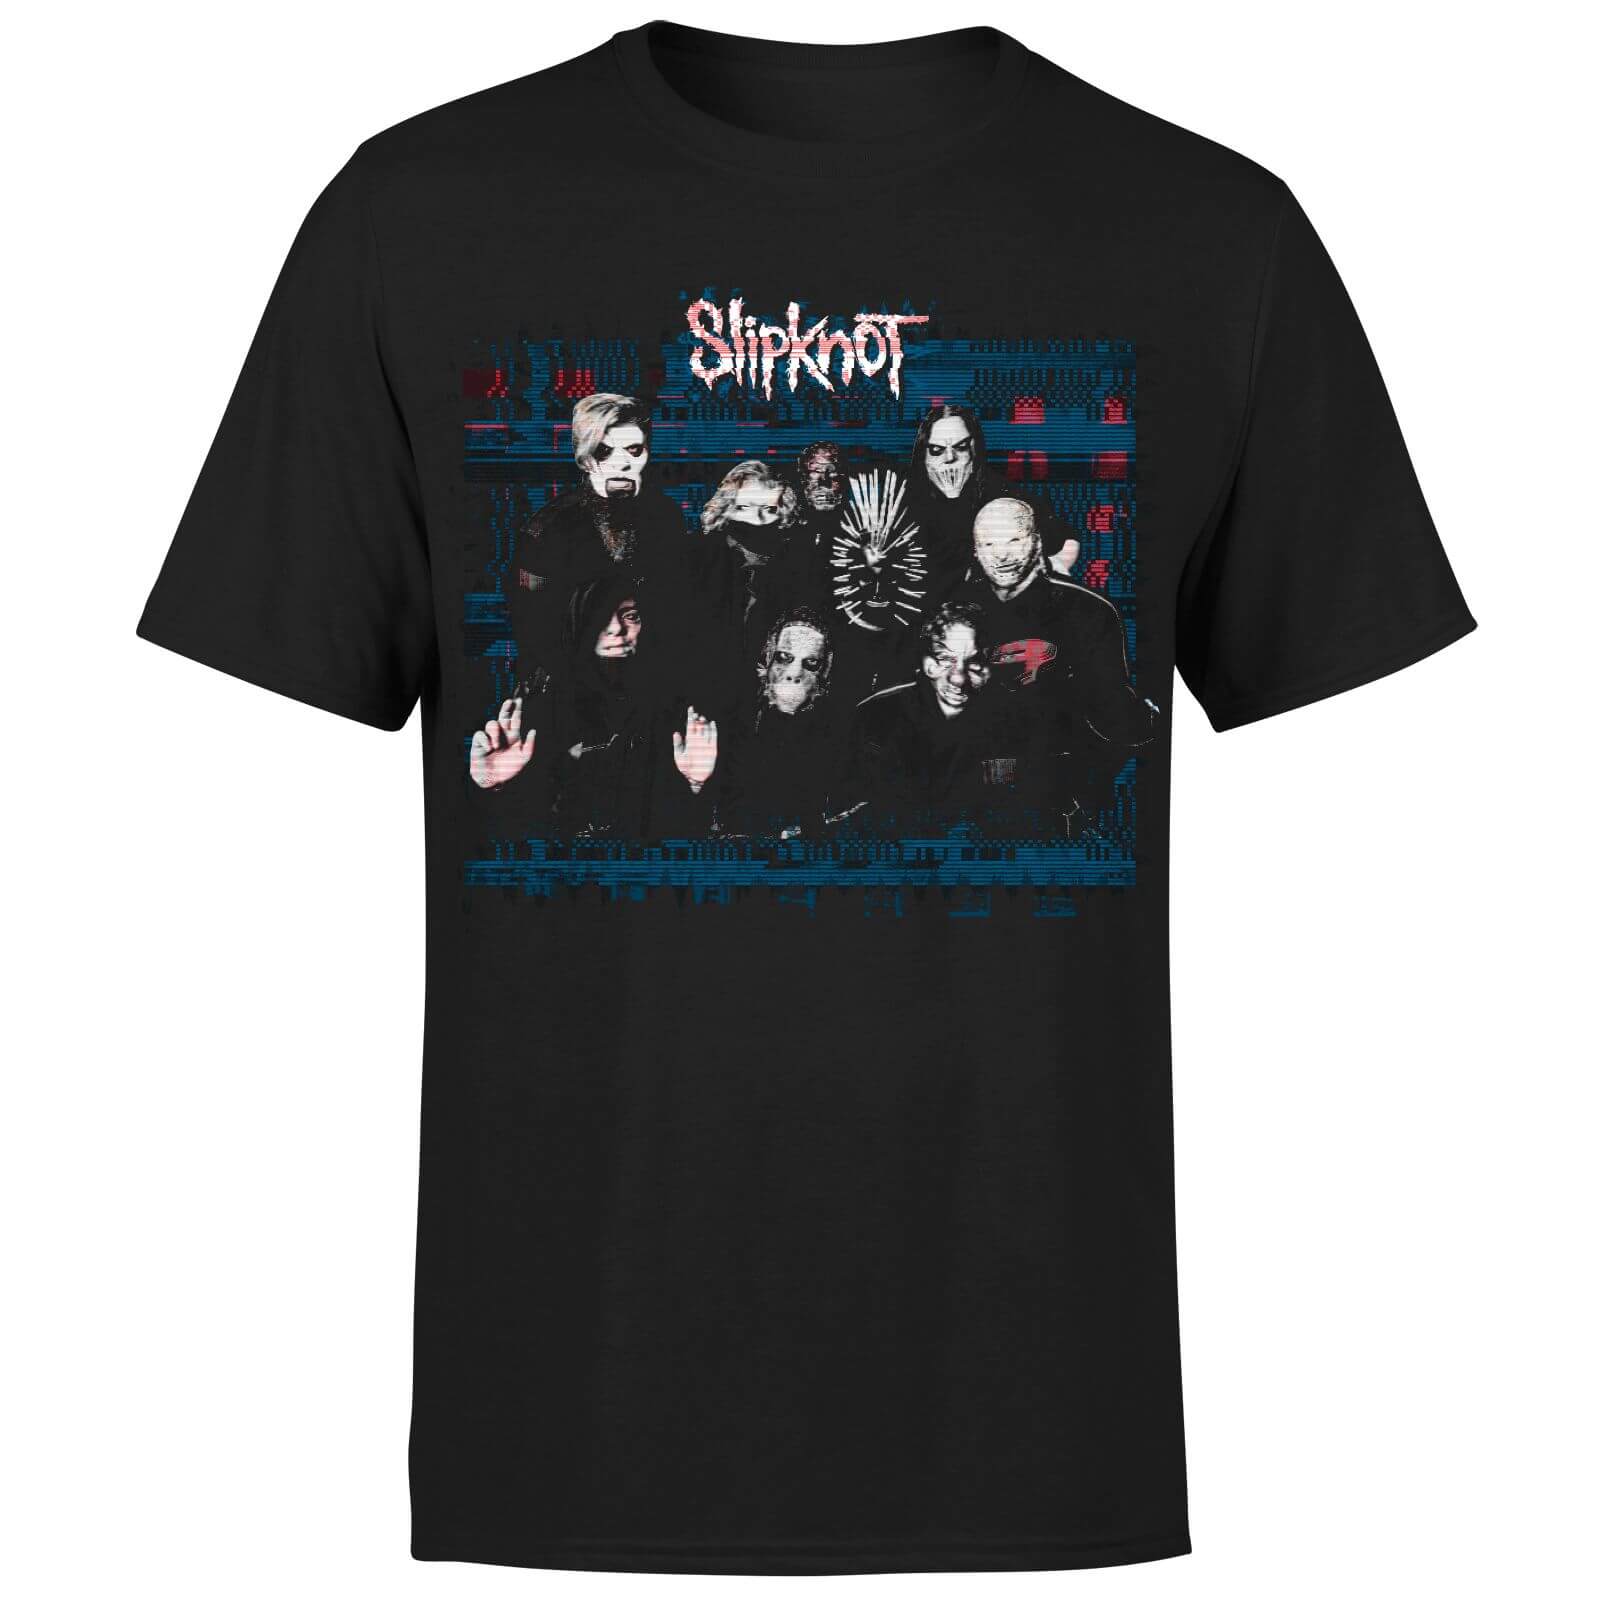 Slipknot Glitch T-Shirt - Black - M - Black